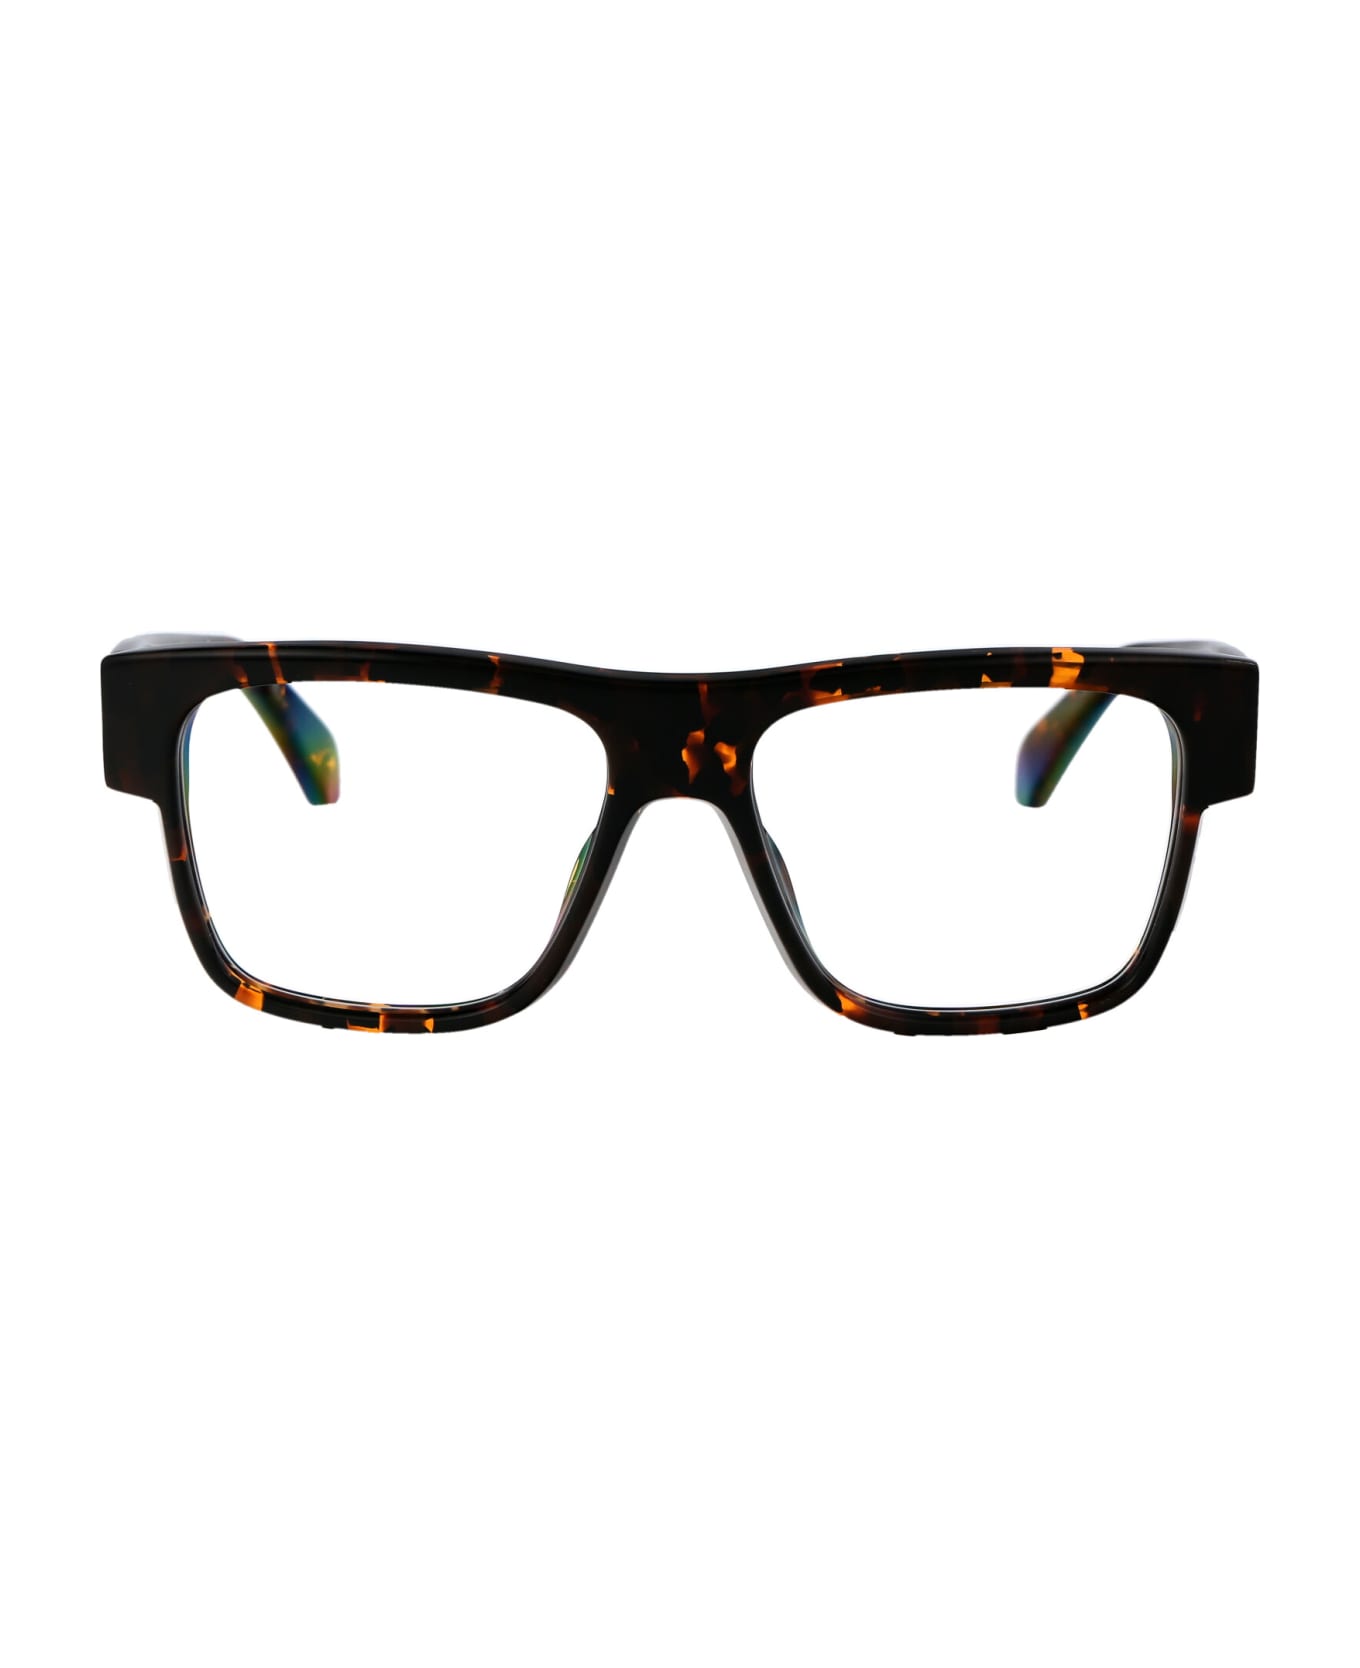 Off-White Optical Style 60 Glasses - 6000 HAVANA